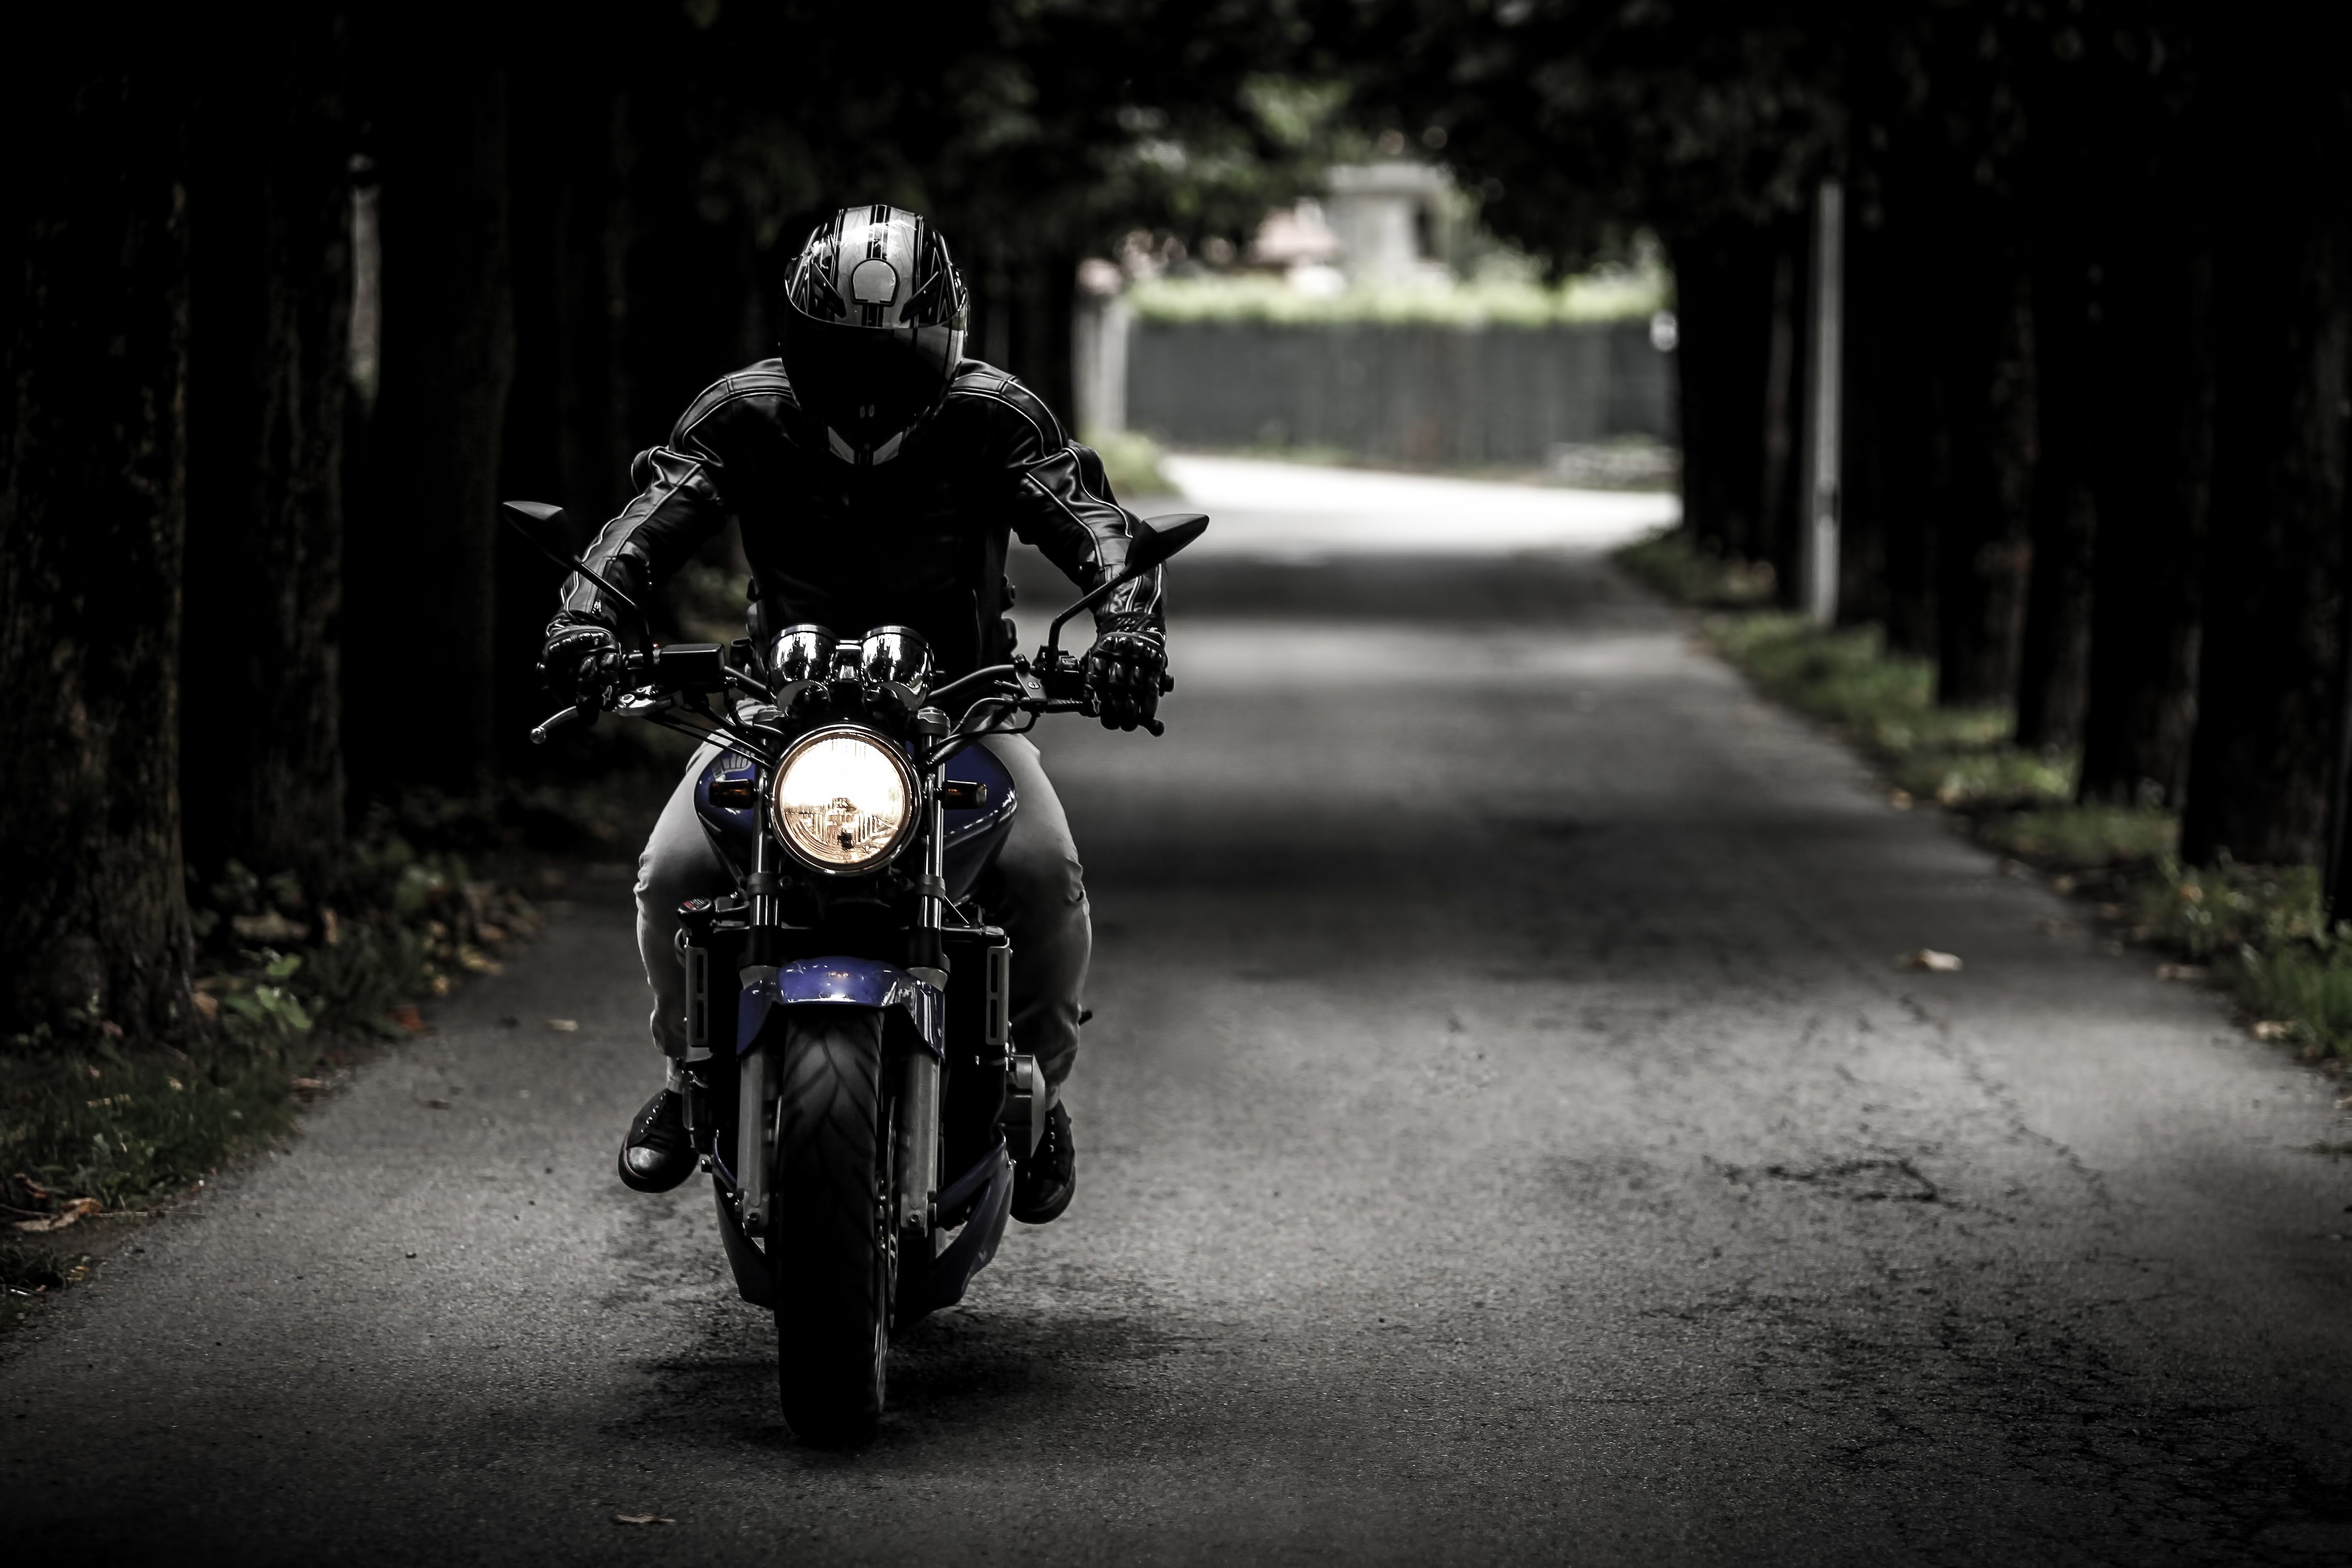 biker, motorcyclist, helmet, motorcycles, traffic, movement, motorcycle